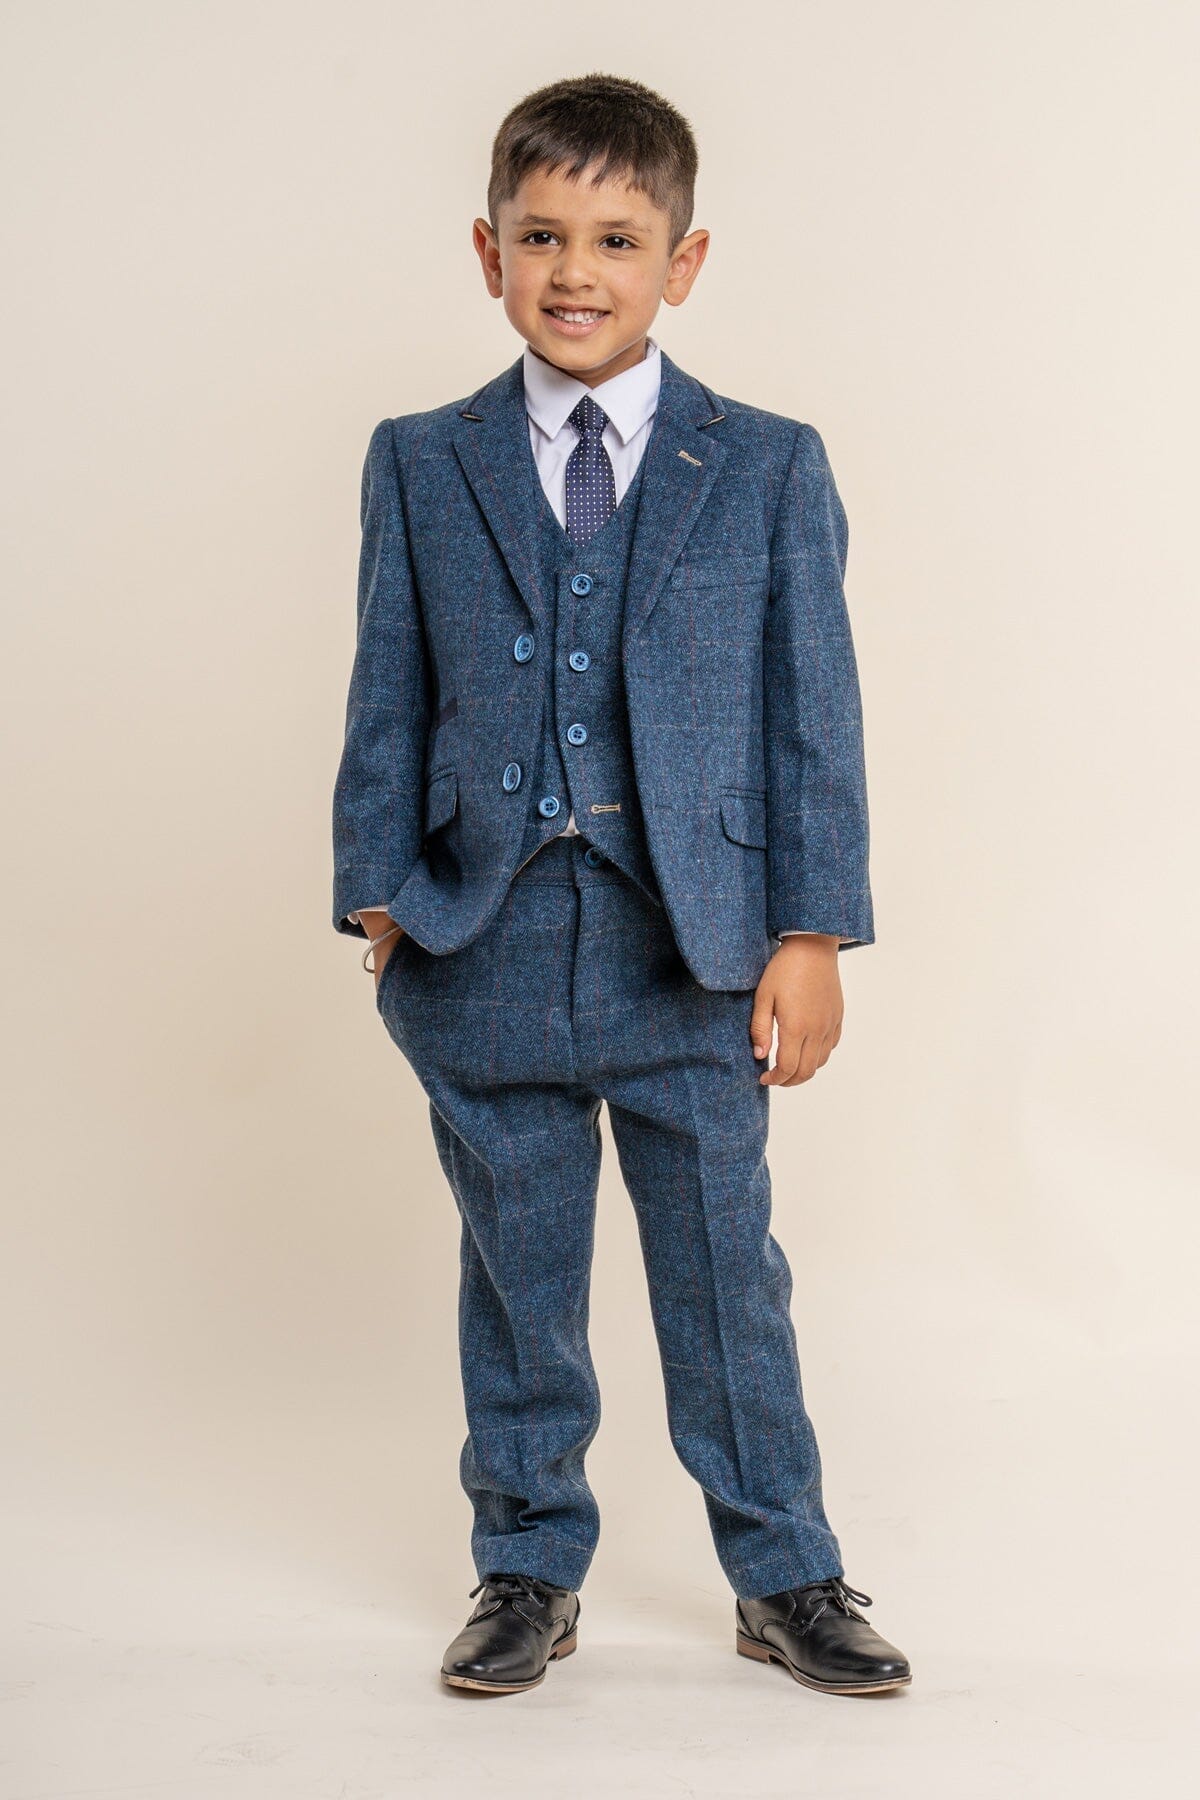 Carnegi Navy Tweed Boys 3 Piece Suit - Childrenswear - 1 